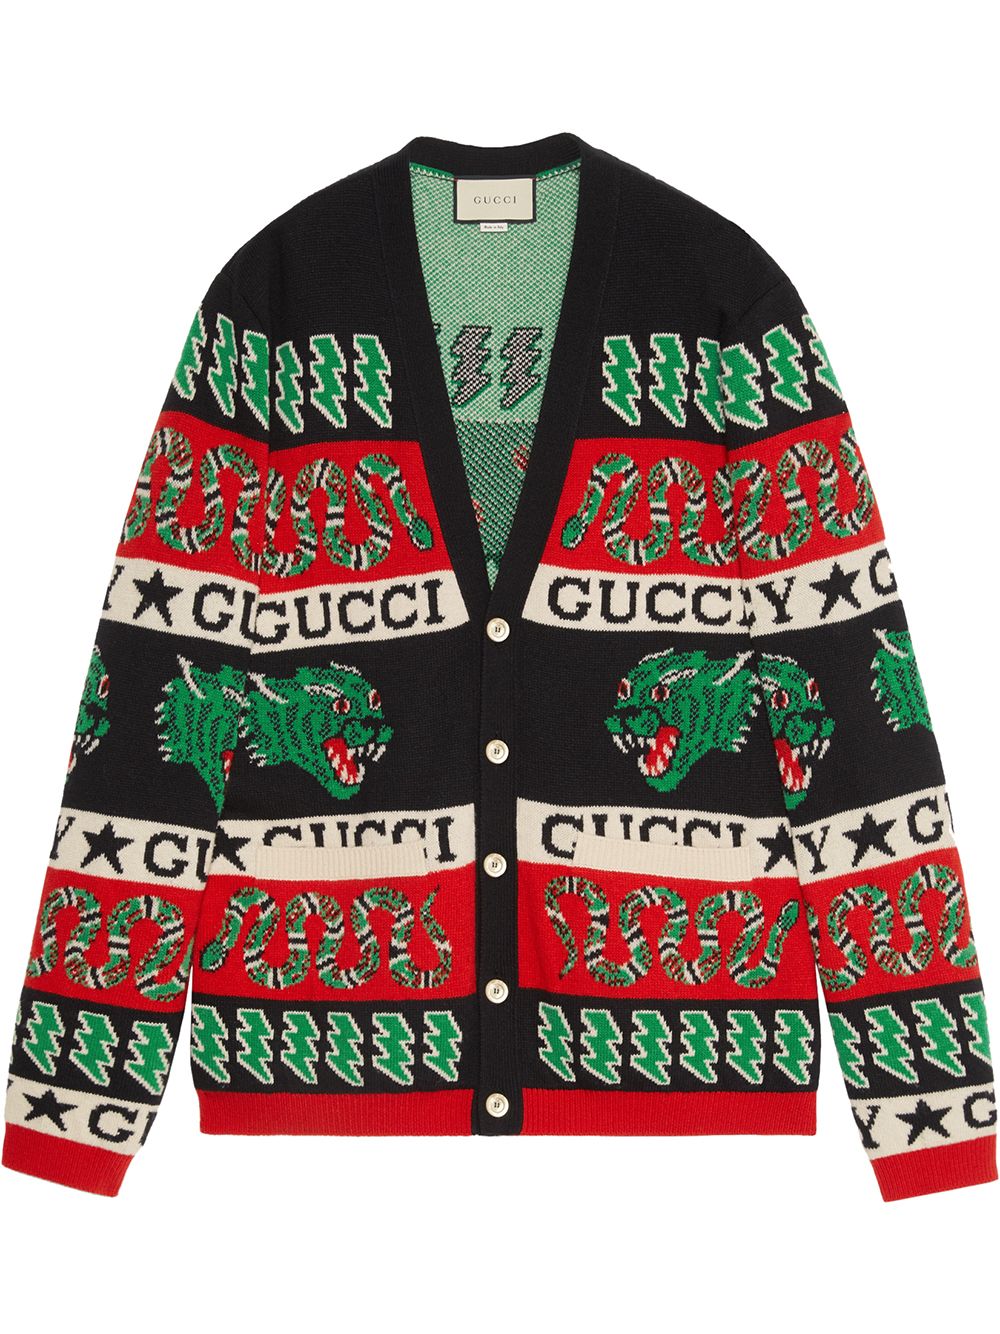 фото Gucci кардиган с жаккардовым орнаментом